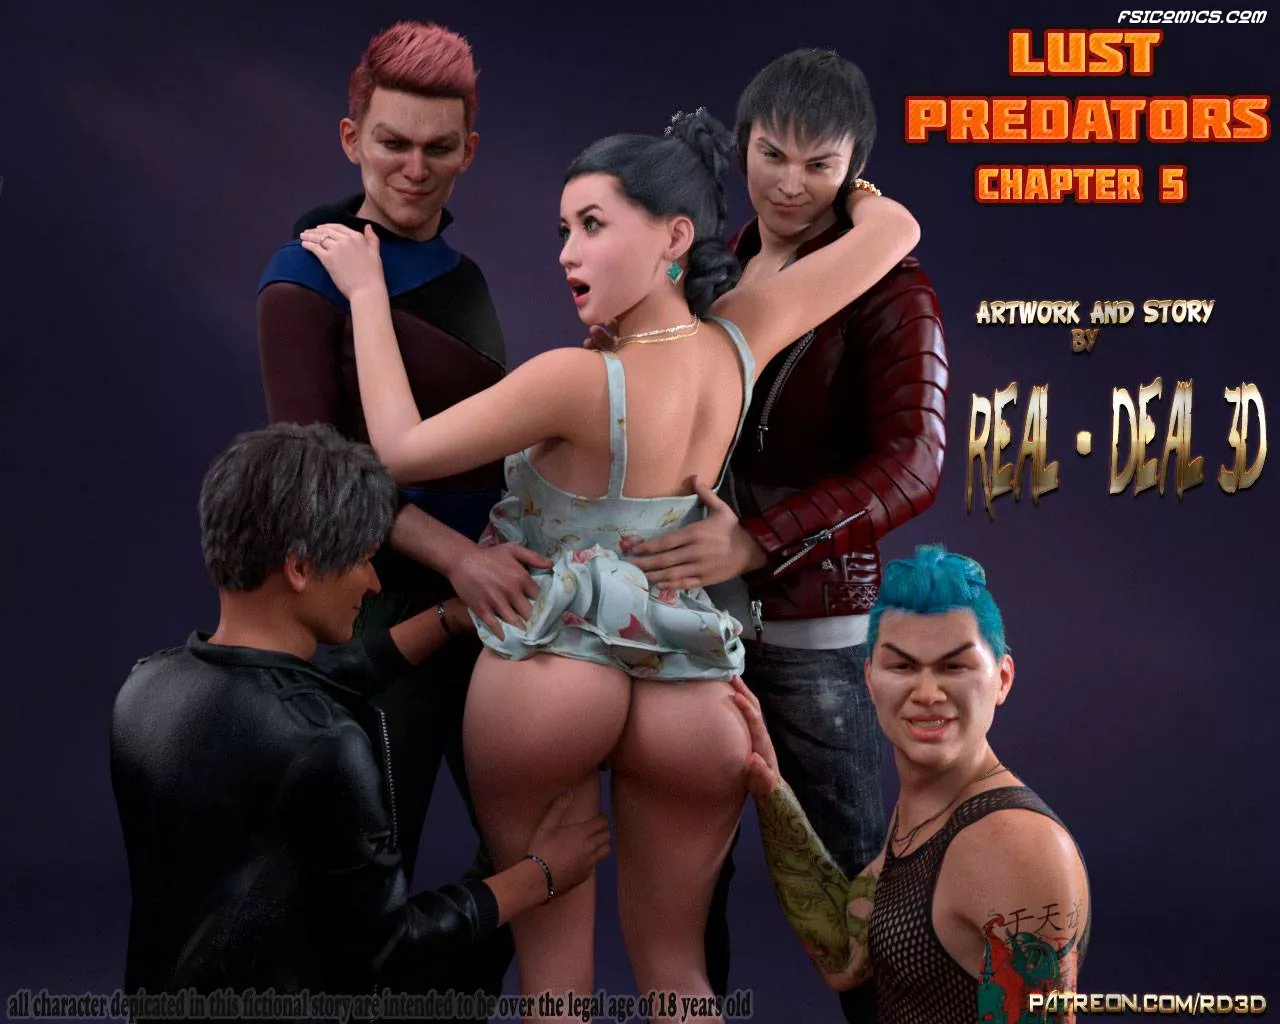 Lust Predators Chapter 5 - Real Deal 3D - 335 - FSIComics